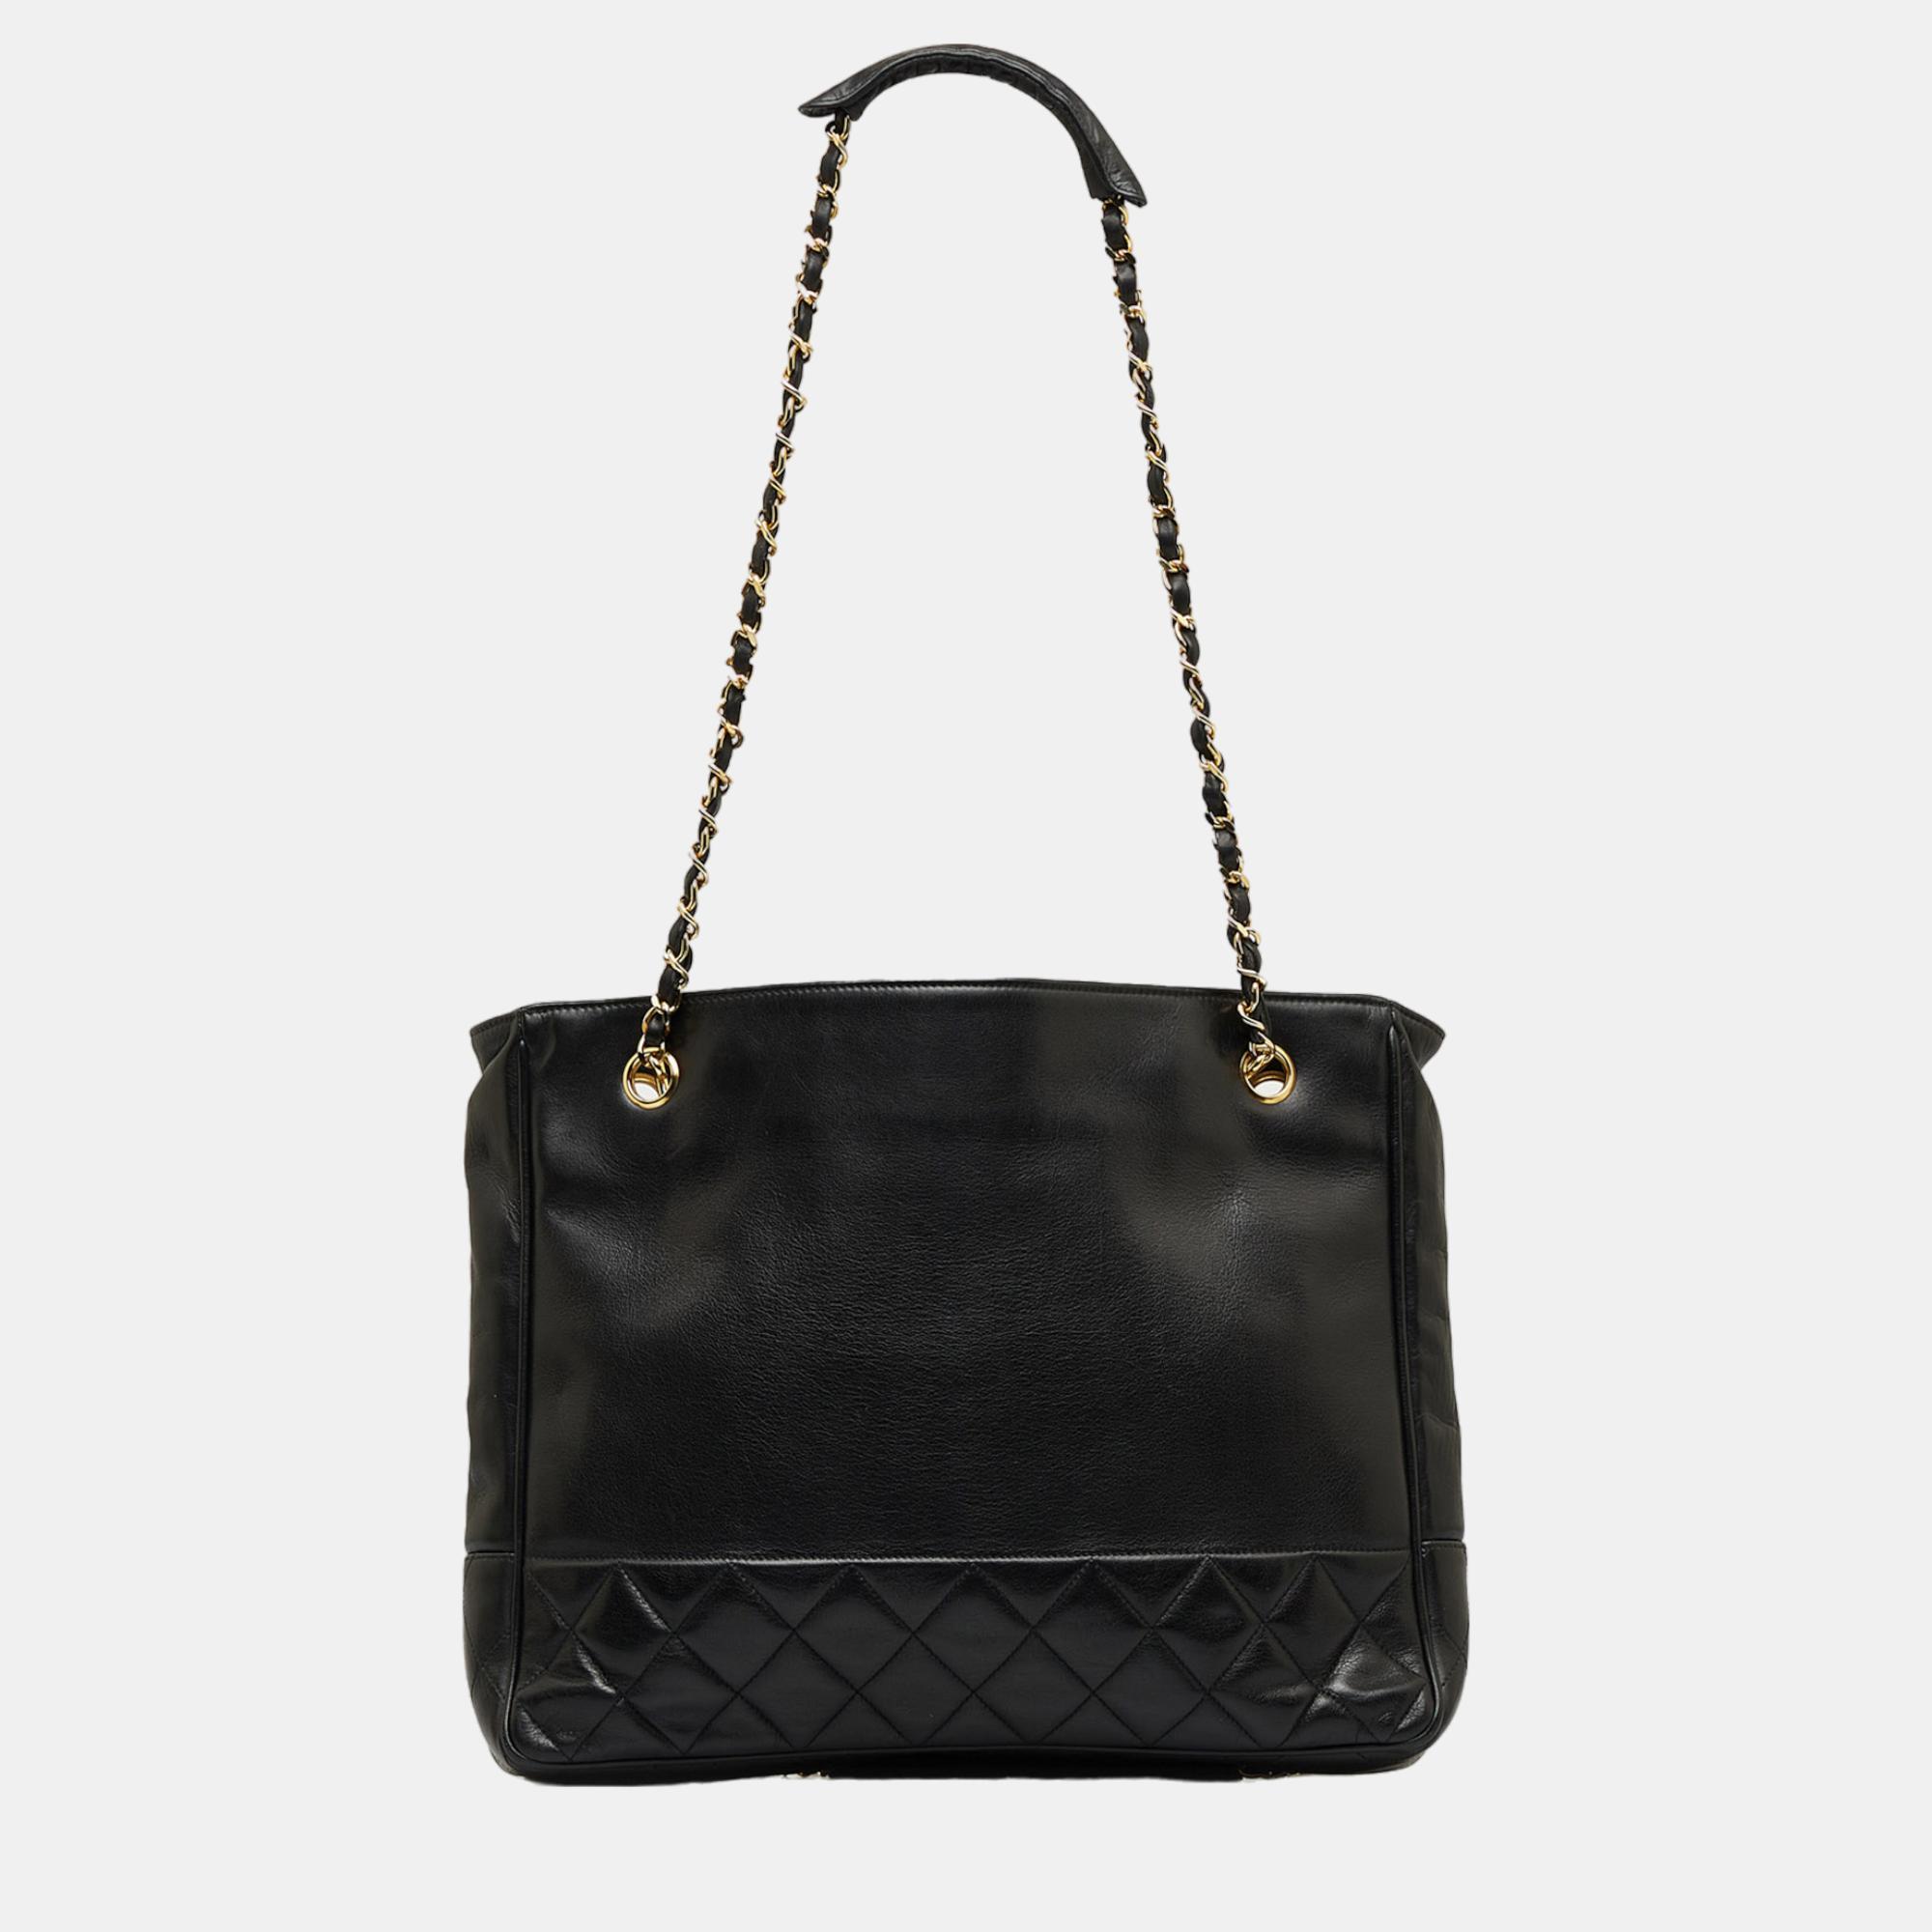 Chanel Black Lambskin Tote Bag